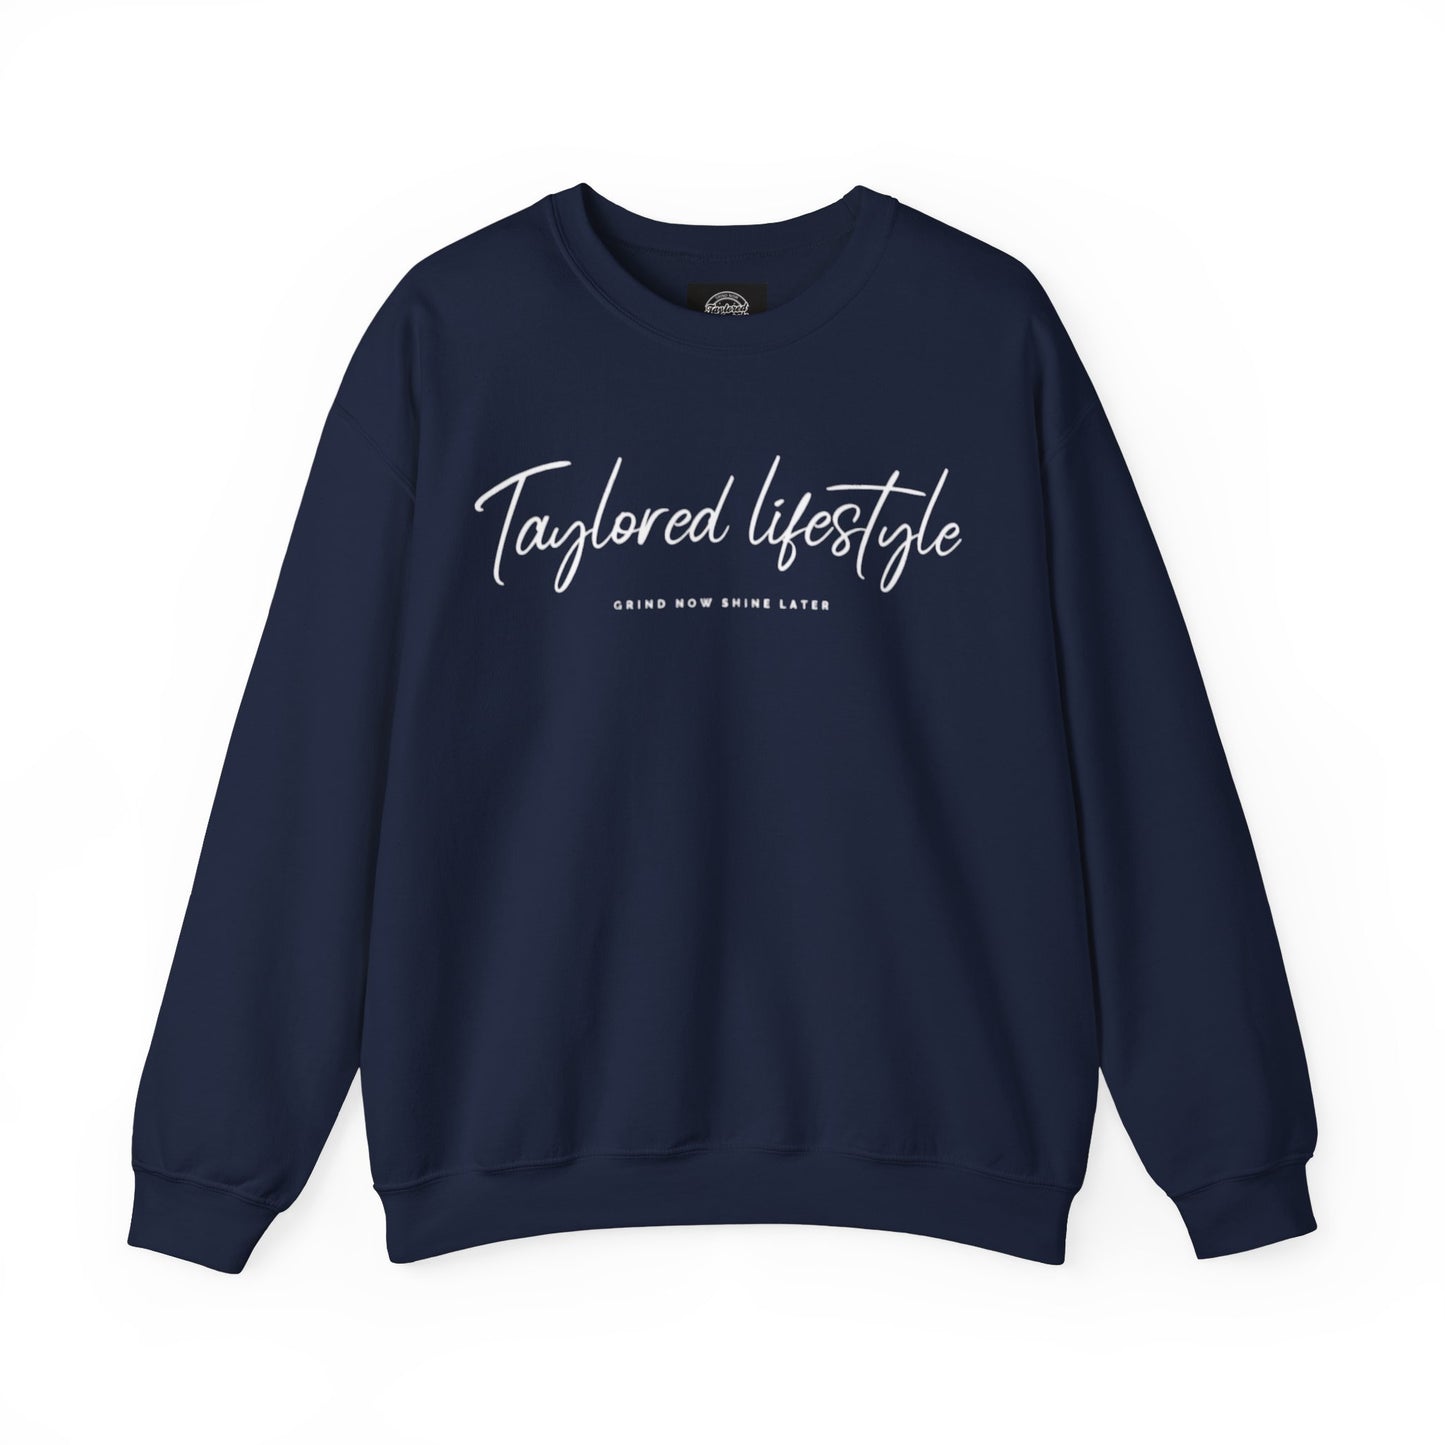 New Logo Taylored Lifestyle Crewneck Sweatshirt